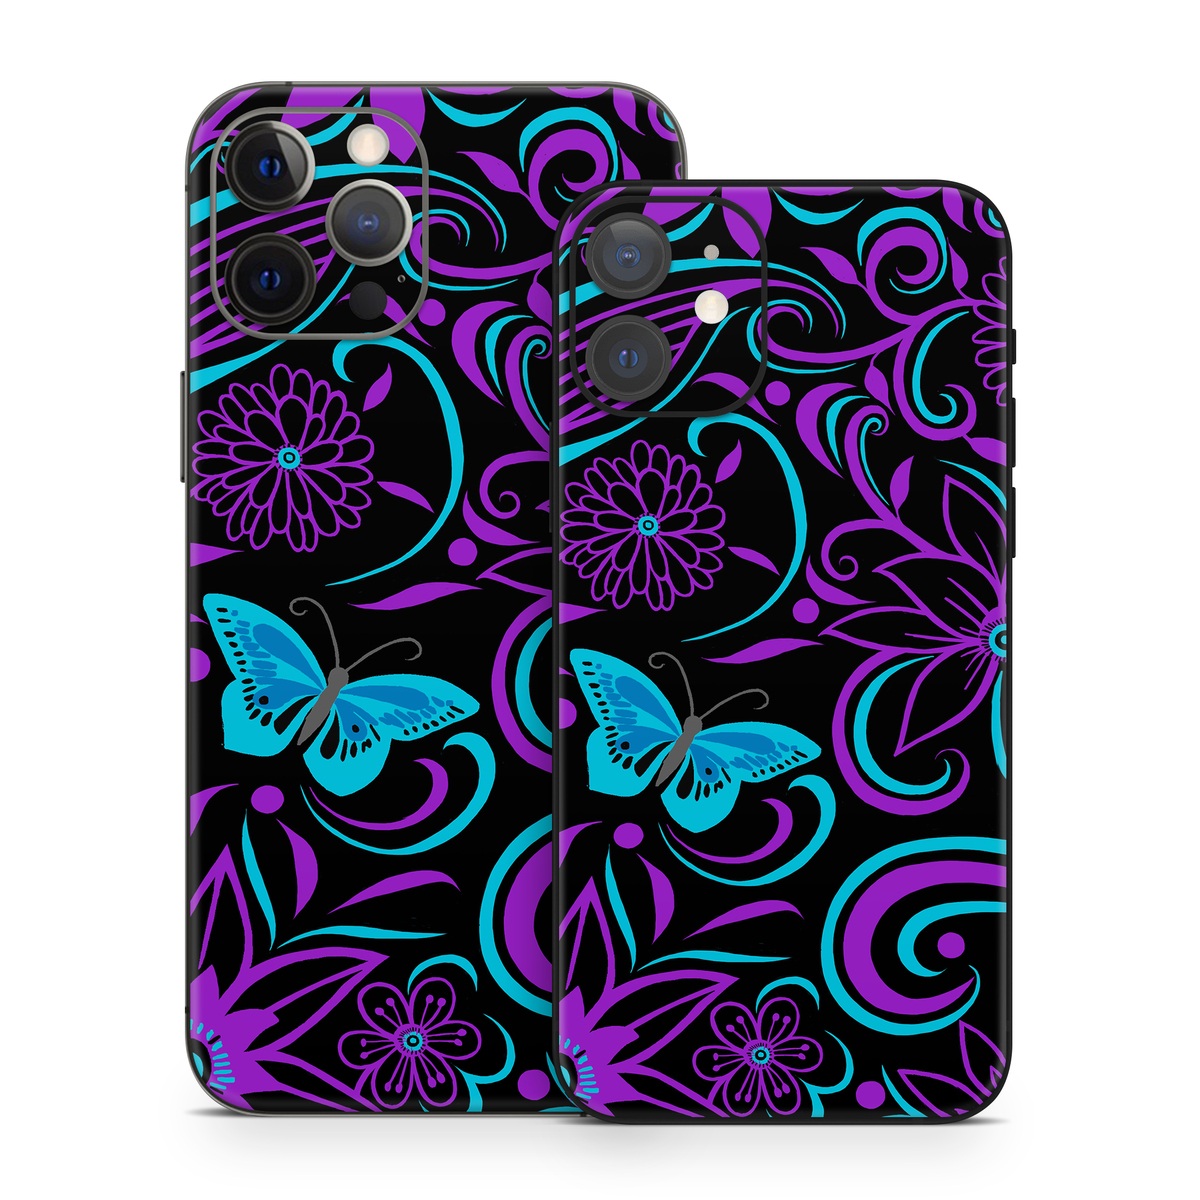 iPhone 12 Series Skin design of Pattern, Purple, Violet, Turquoise, Teal, Design, Floral design, Visual arts, Magenta, Motif, with black, purple, blue colors